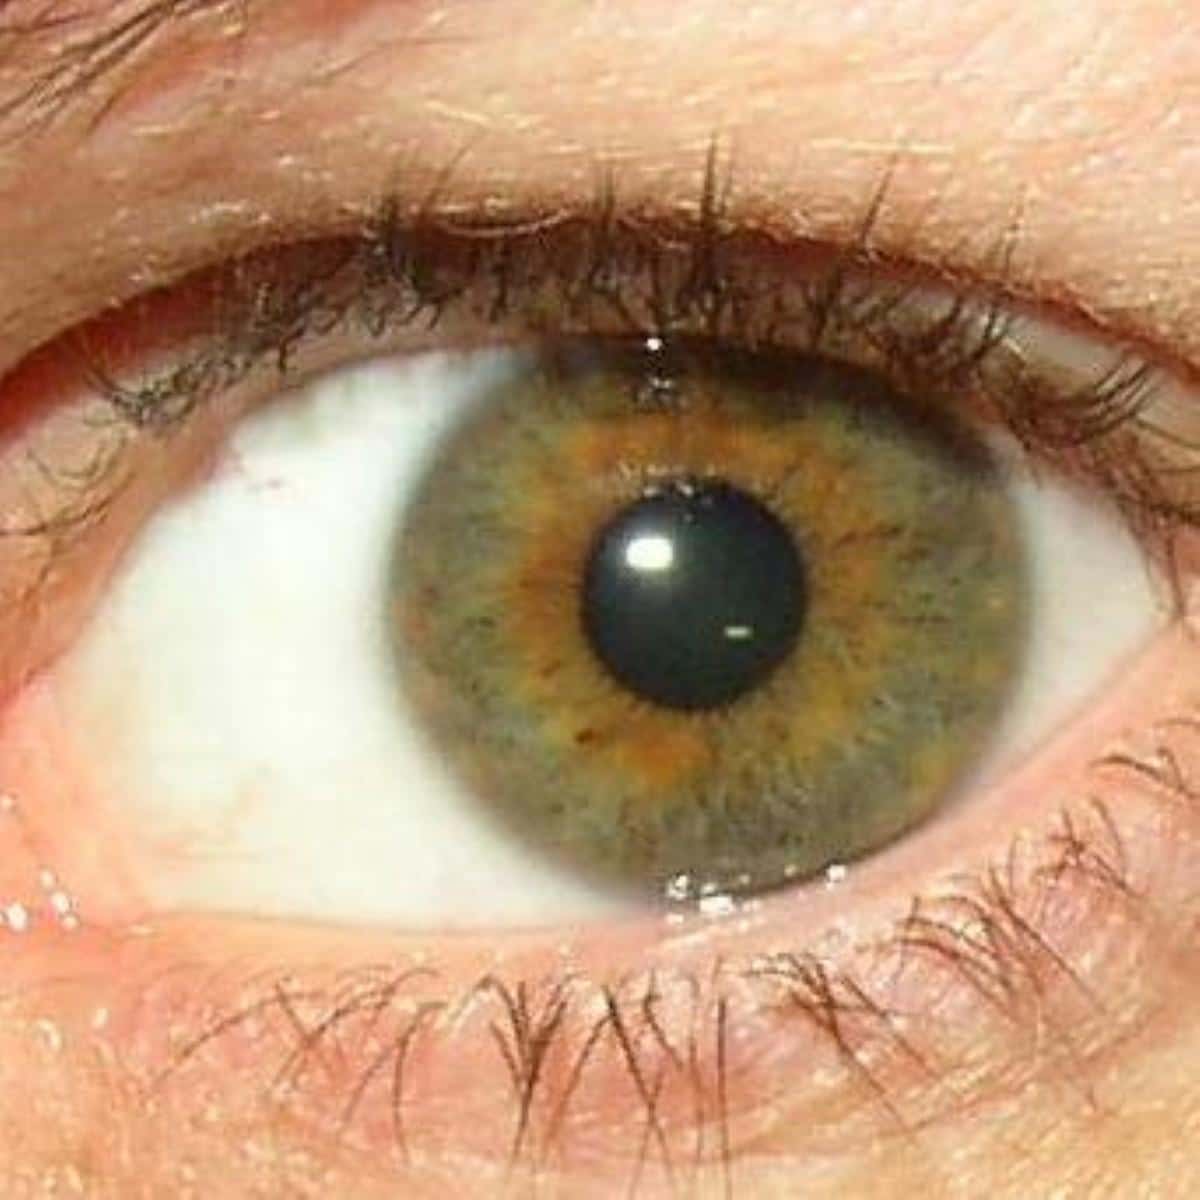 Ocular tremors common in Parkinson